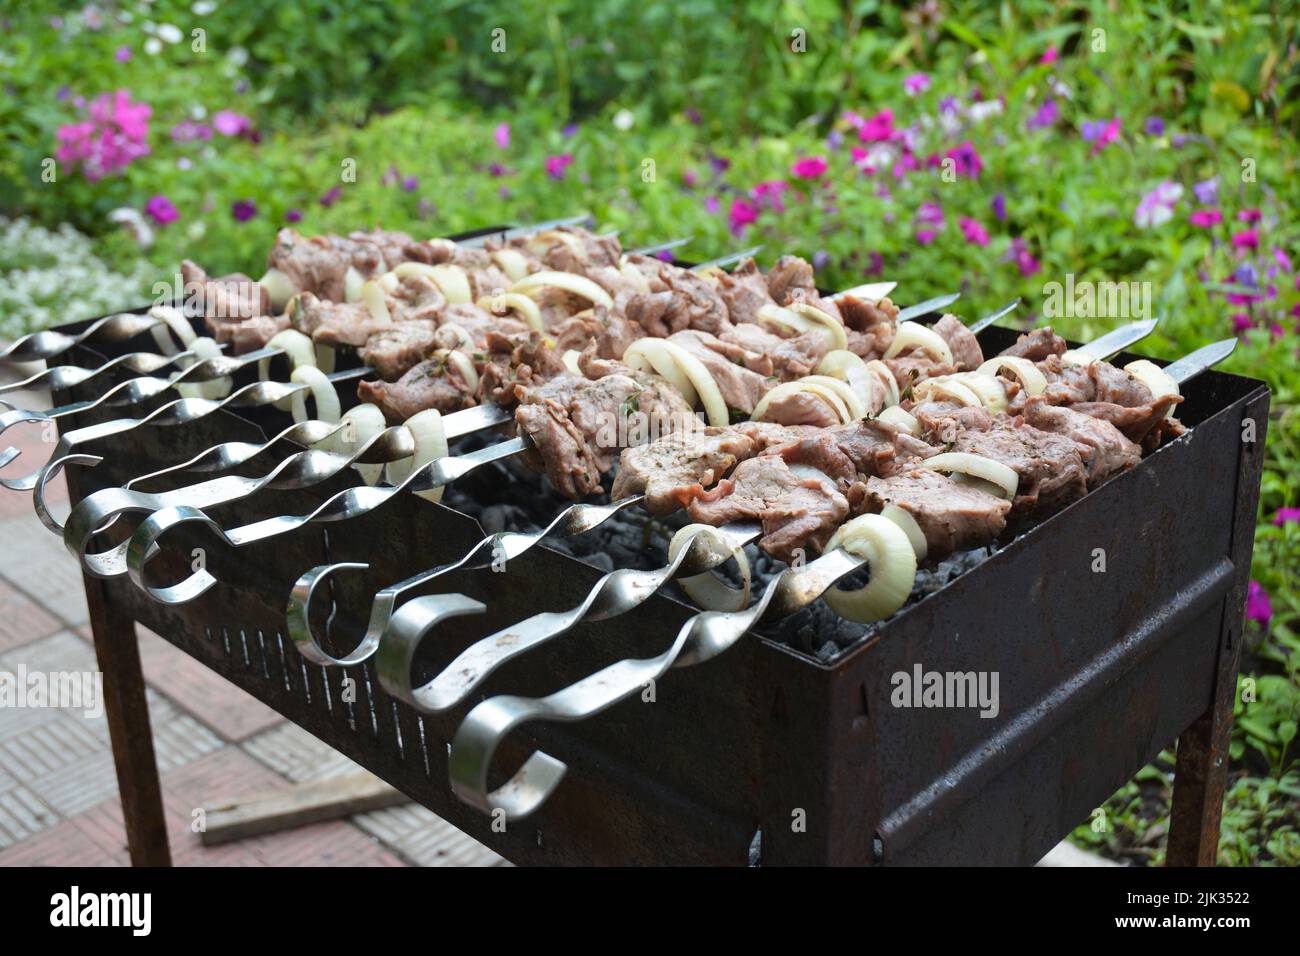 A close-up of shashlik or shish kebab, marinated chunks of meat on skewers cooked on mangal outdoors. Stock Photo